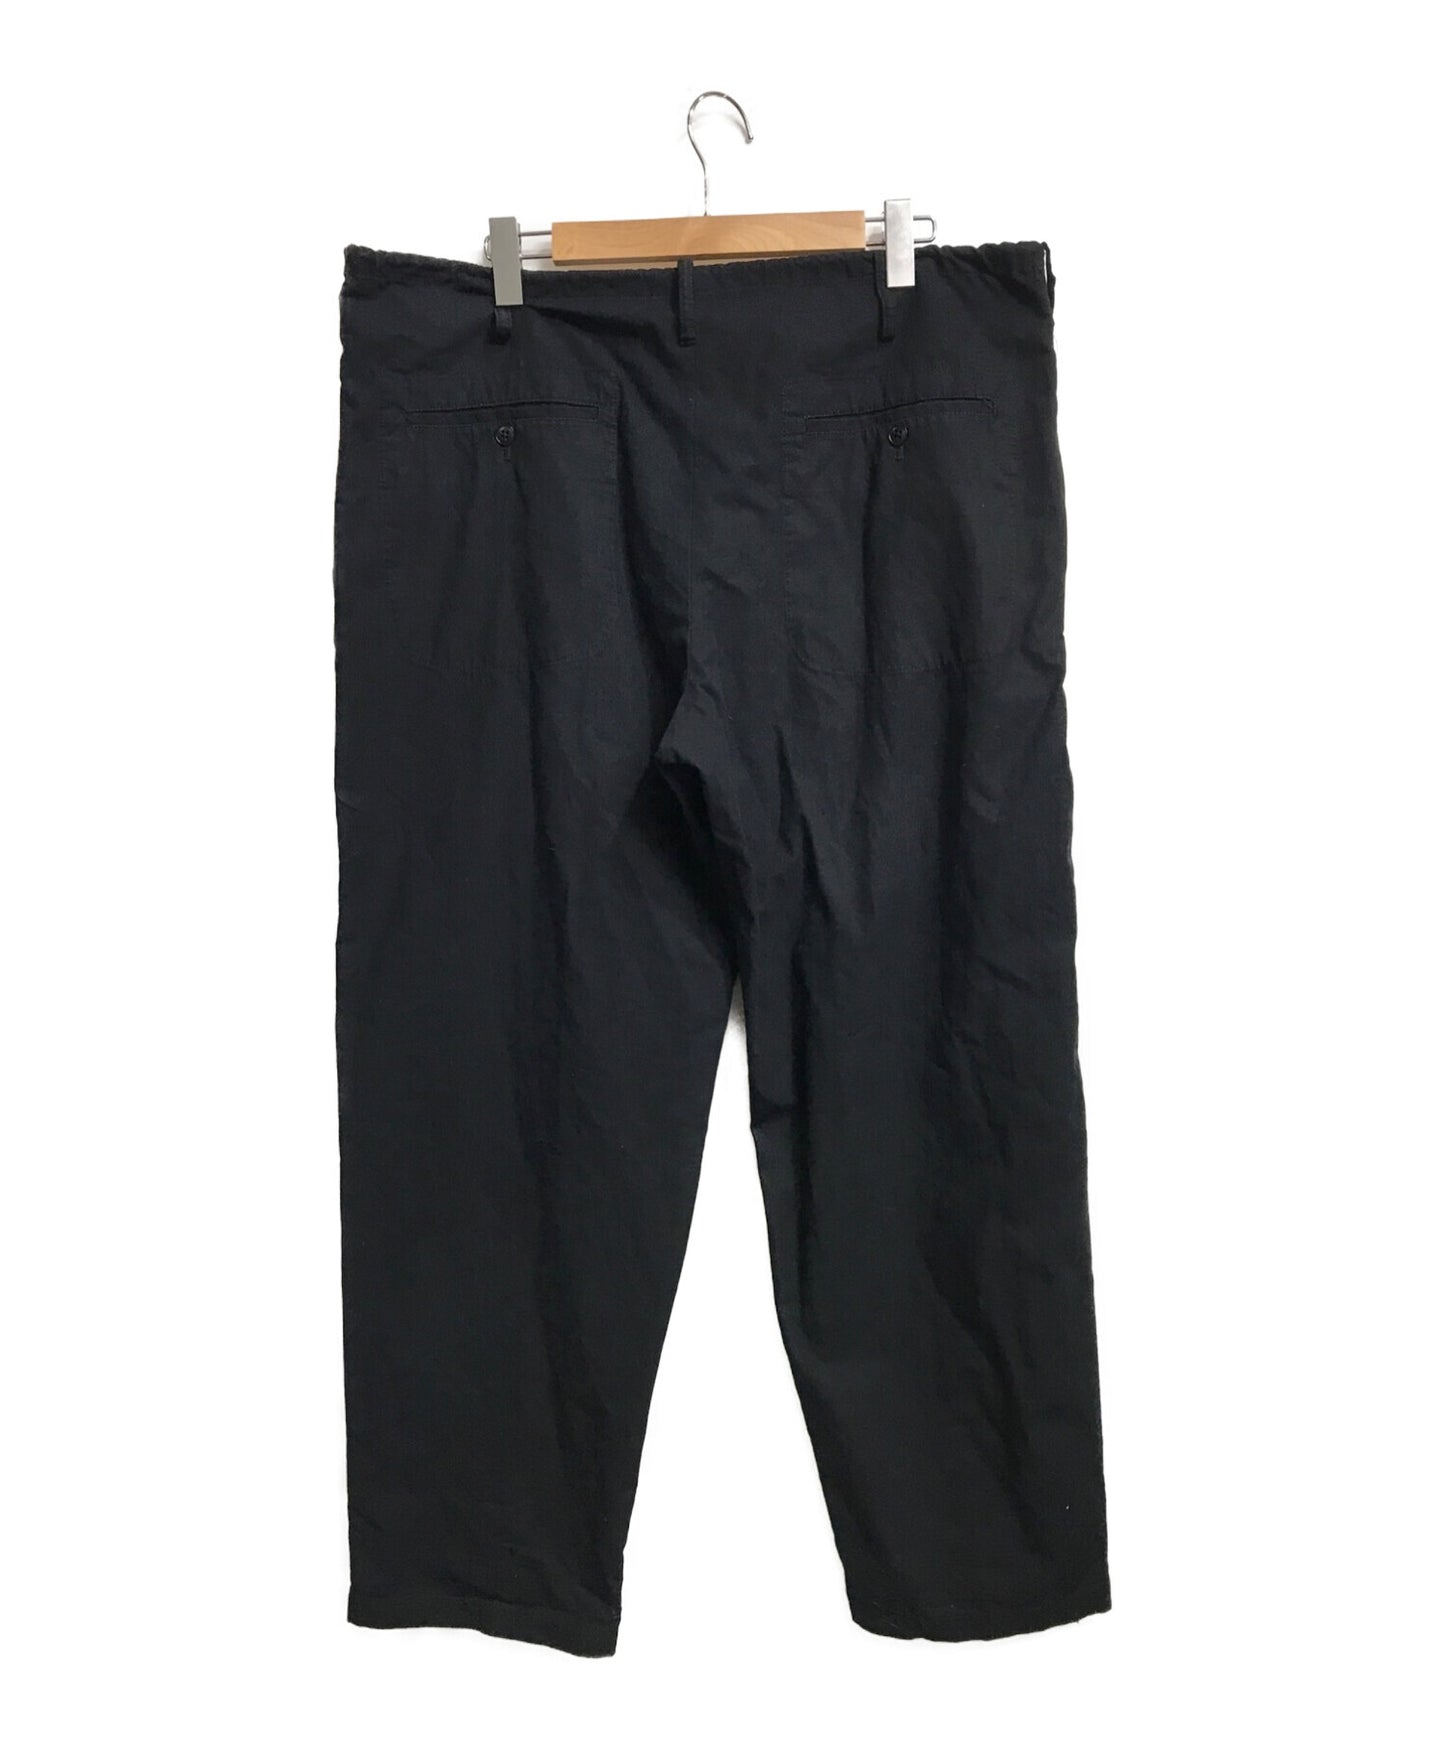 Yohji Yamamoto pour homme Cotton ripstop waist pants HX-P01-001